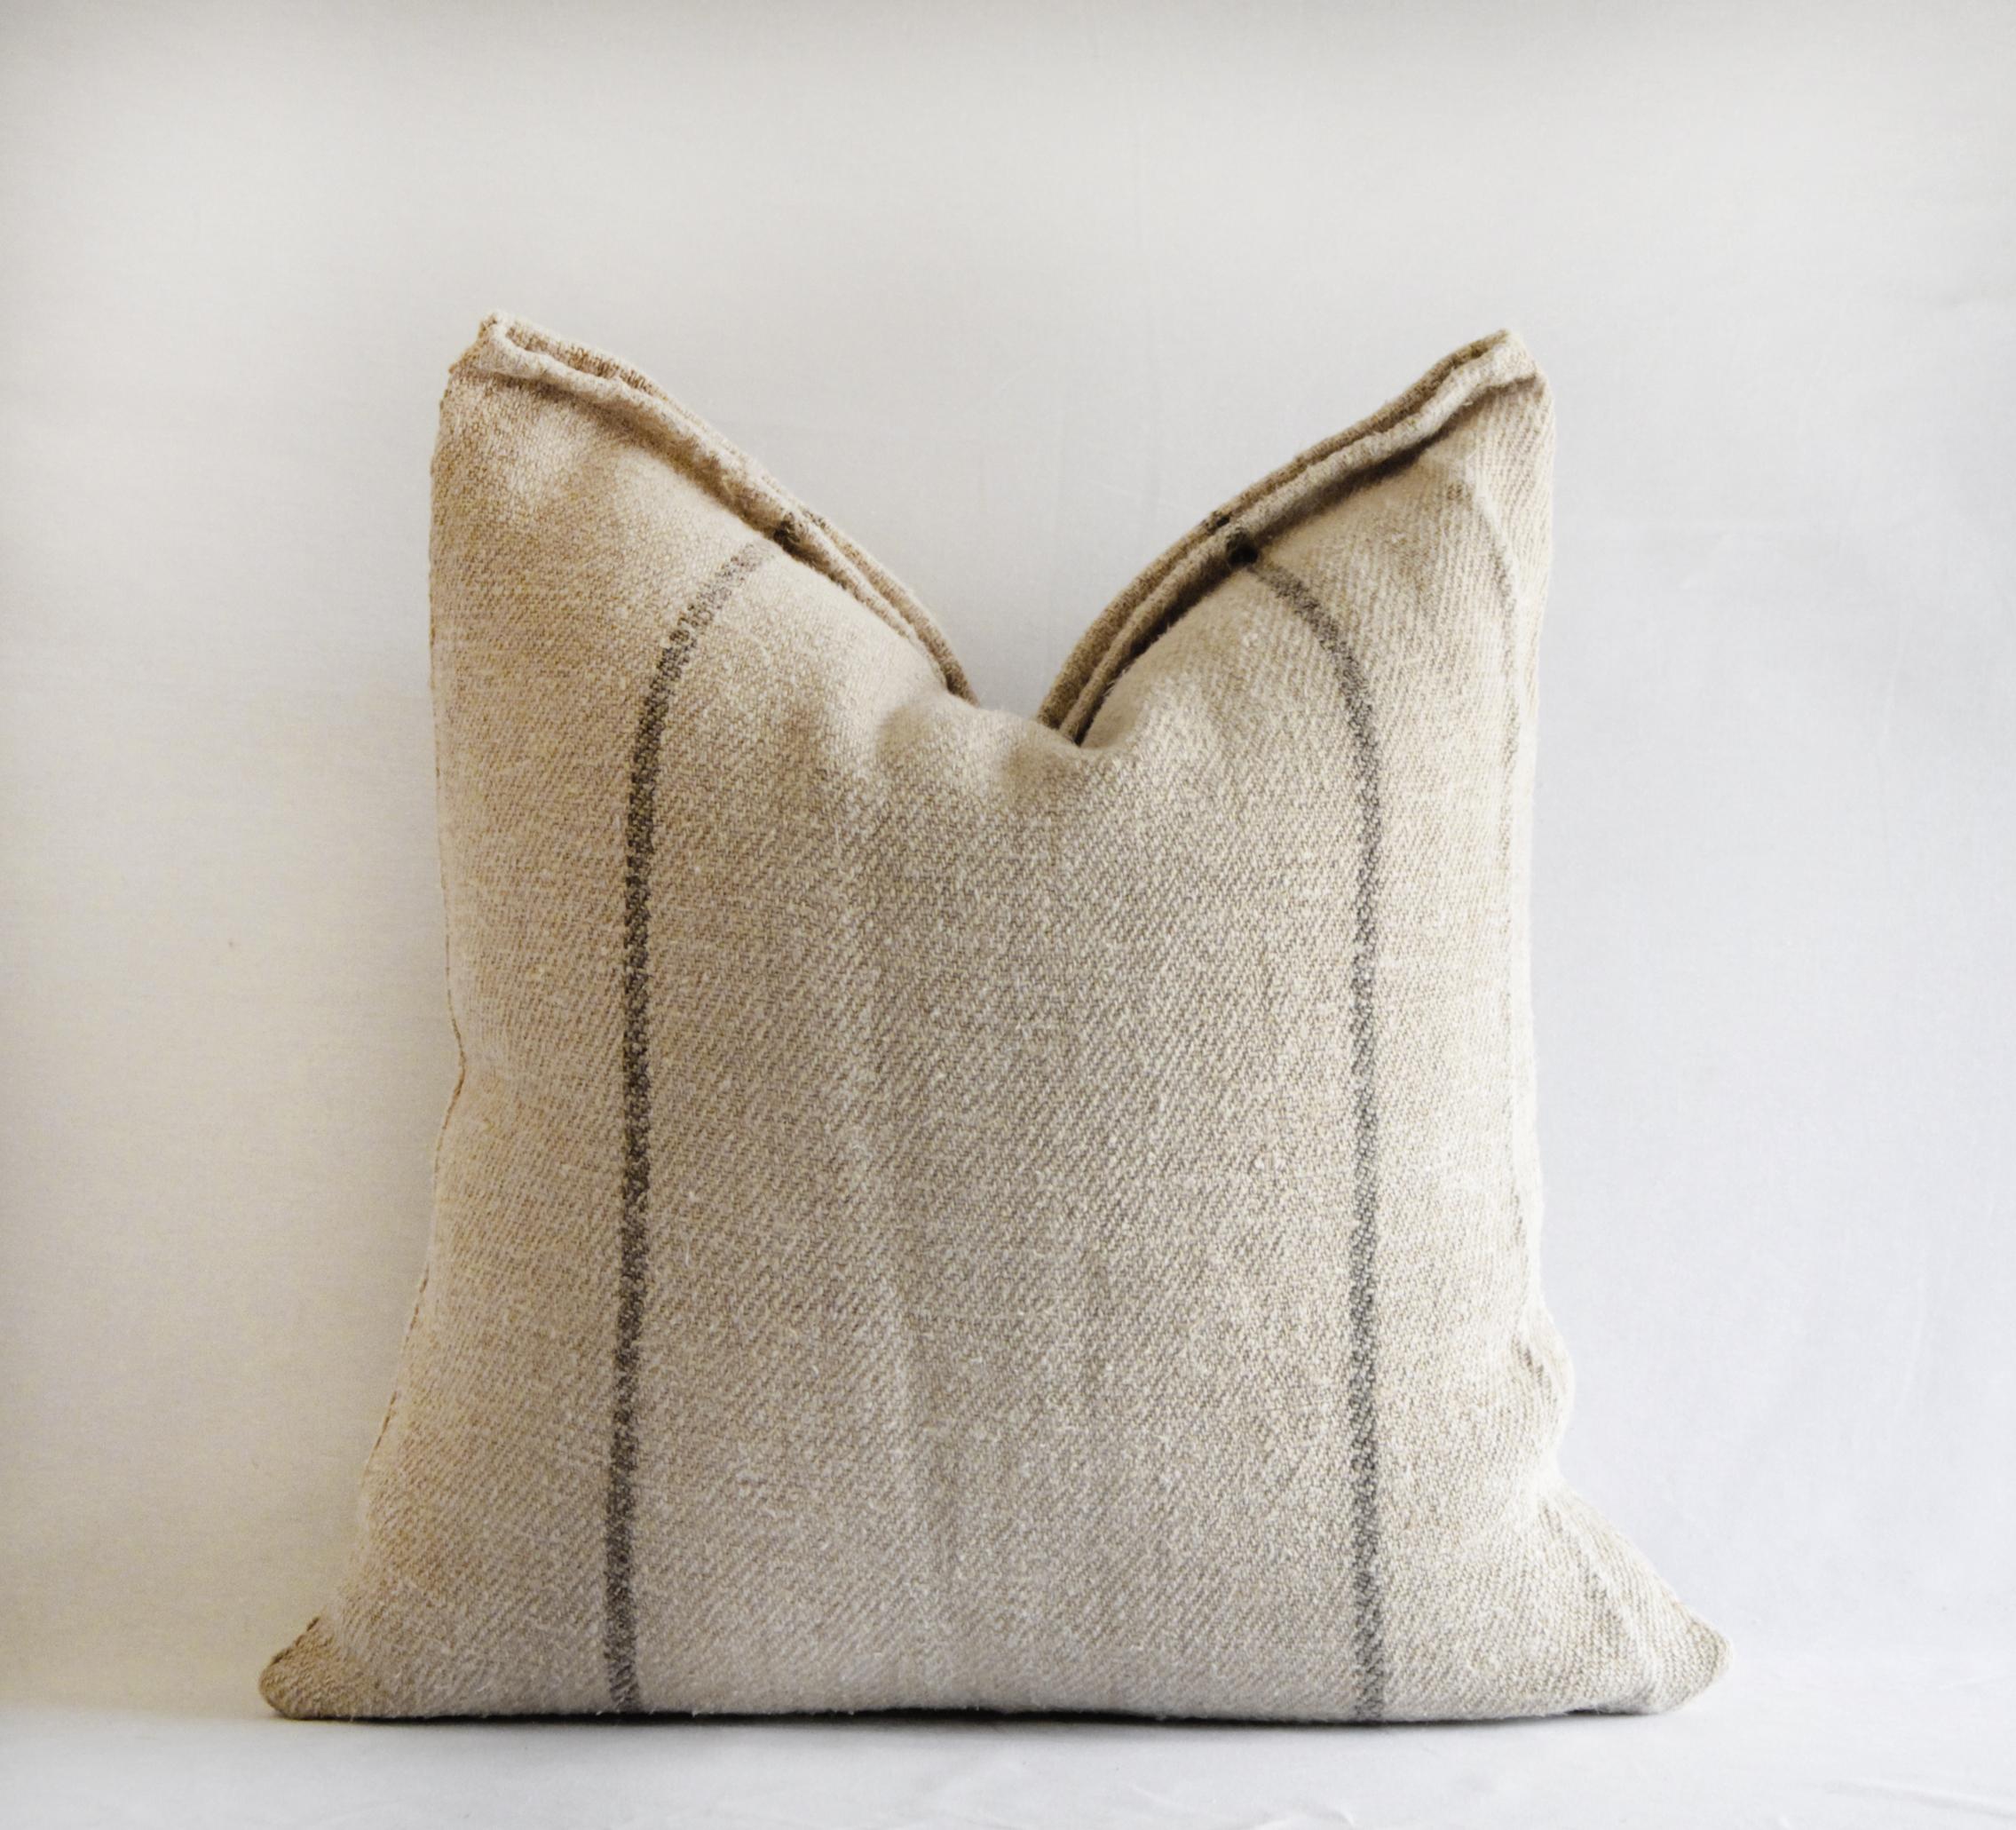 Vintage European grain sack pillows with medium brown stripe
Measures: 22